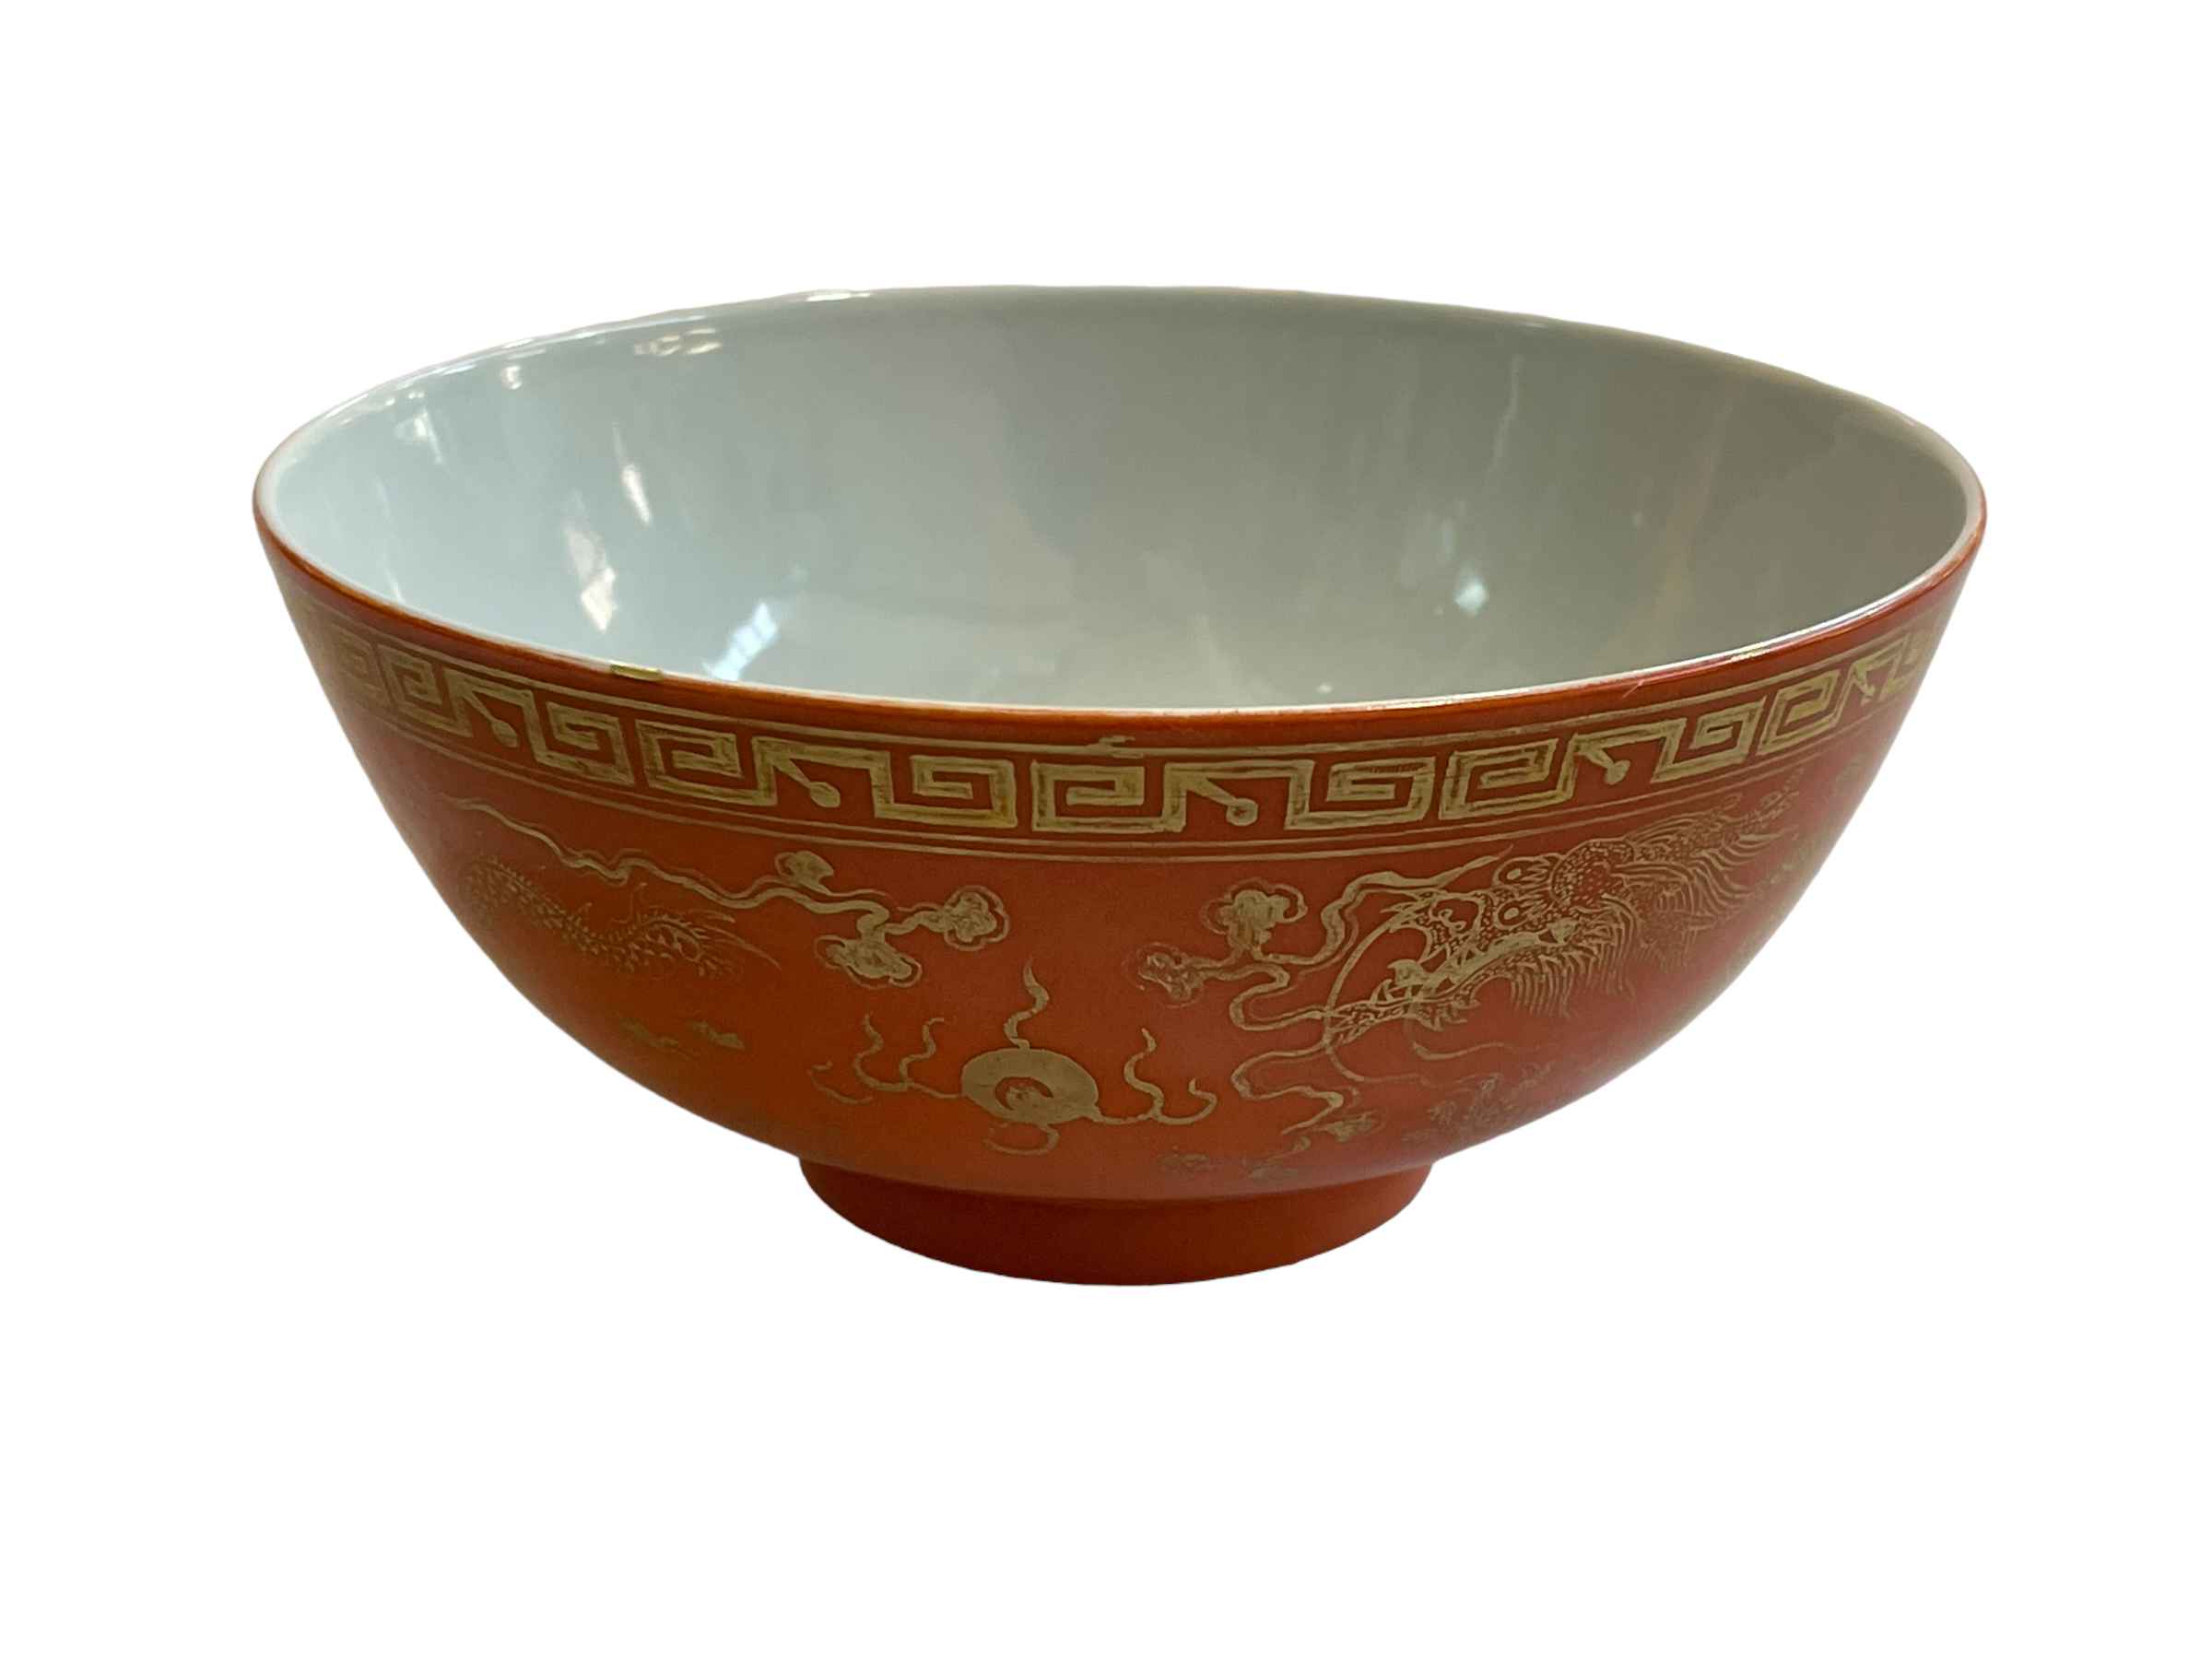 Chinese bowl with gilt dragons on orange ground, 16cm diameter.